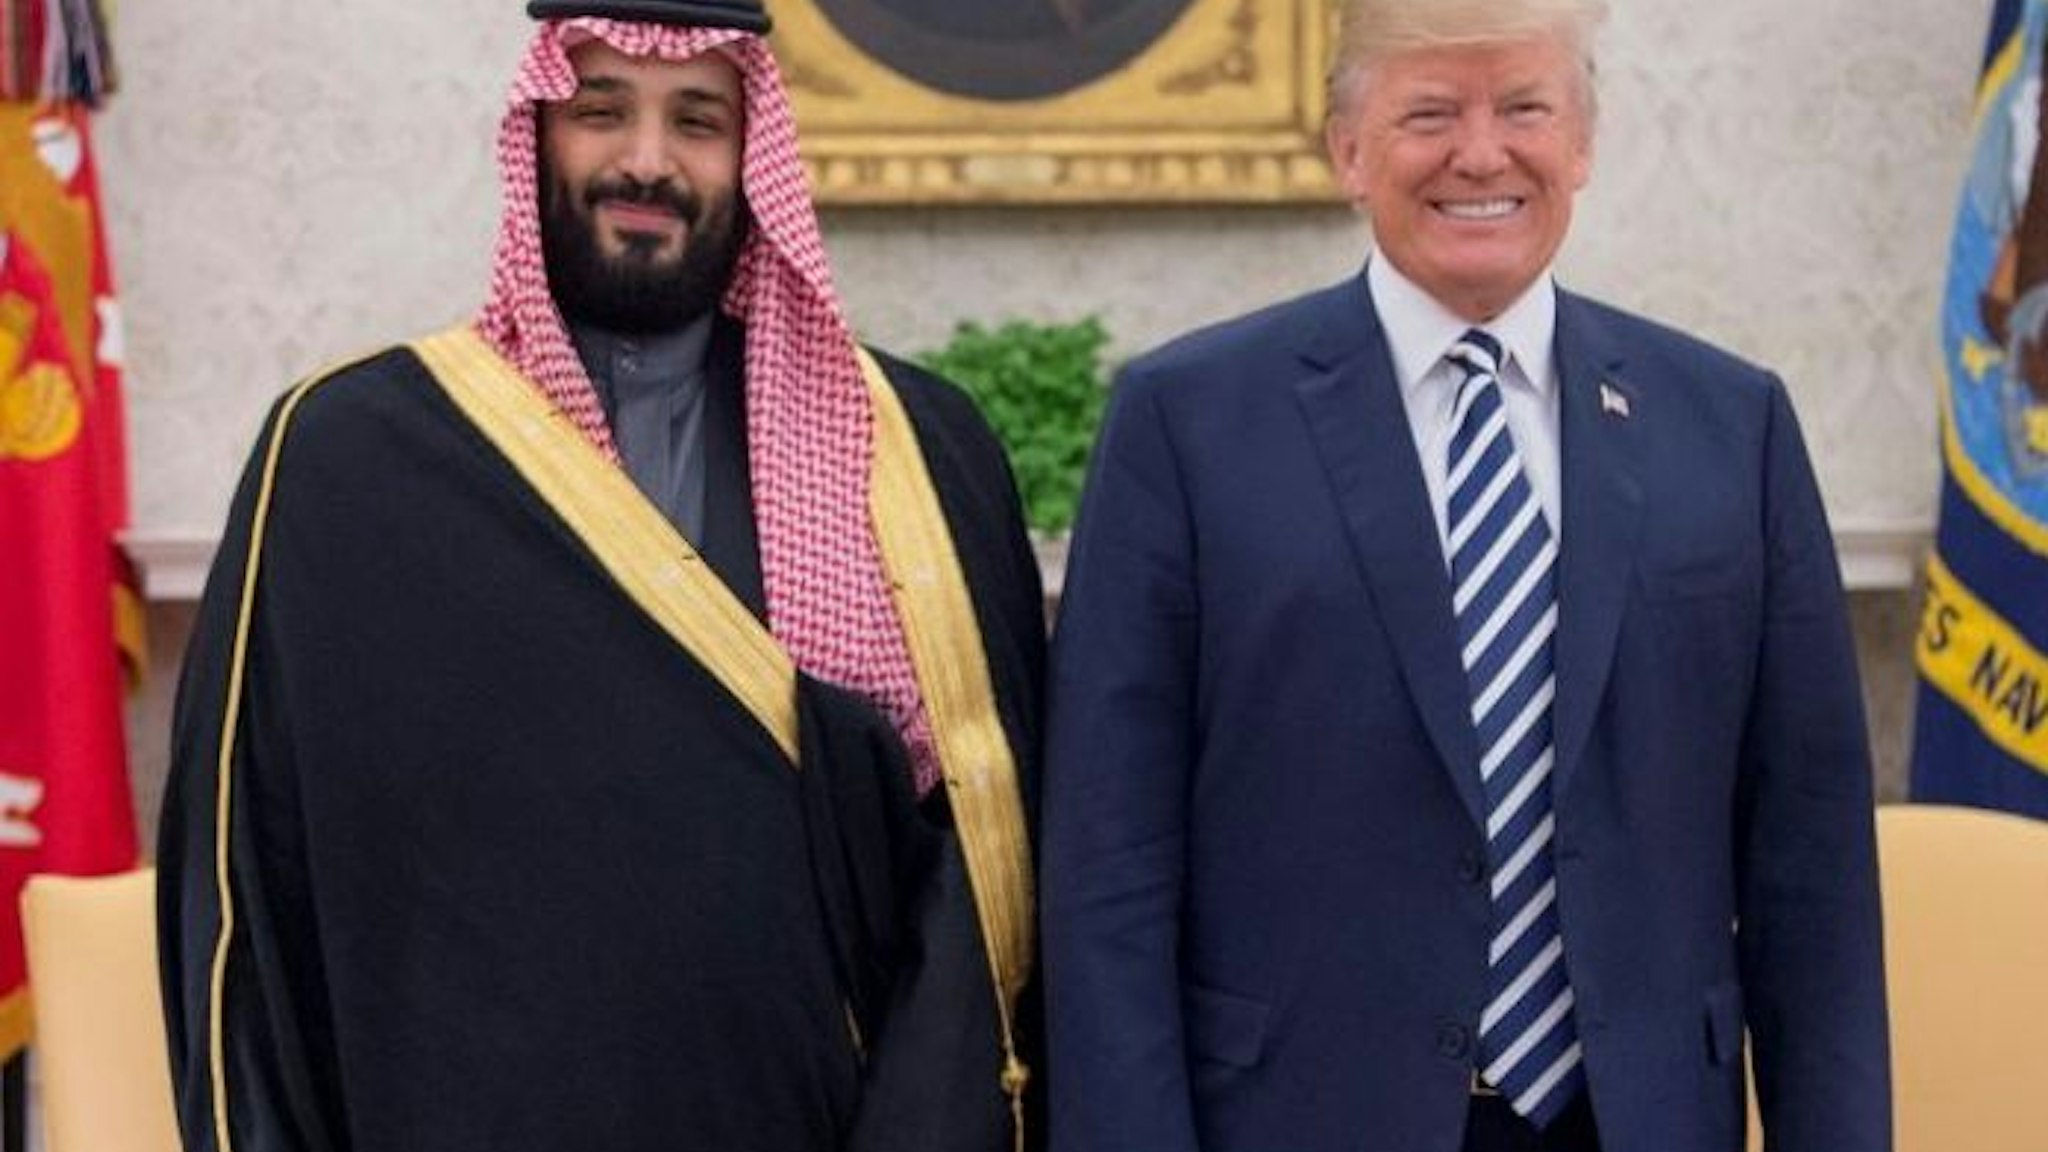 U.S. President Donald Trump (R) poses for a photo with Crown Prince Mohammed bin Salman Al Saud of Saudi Arabia